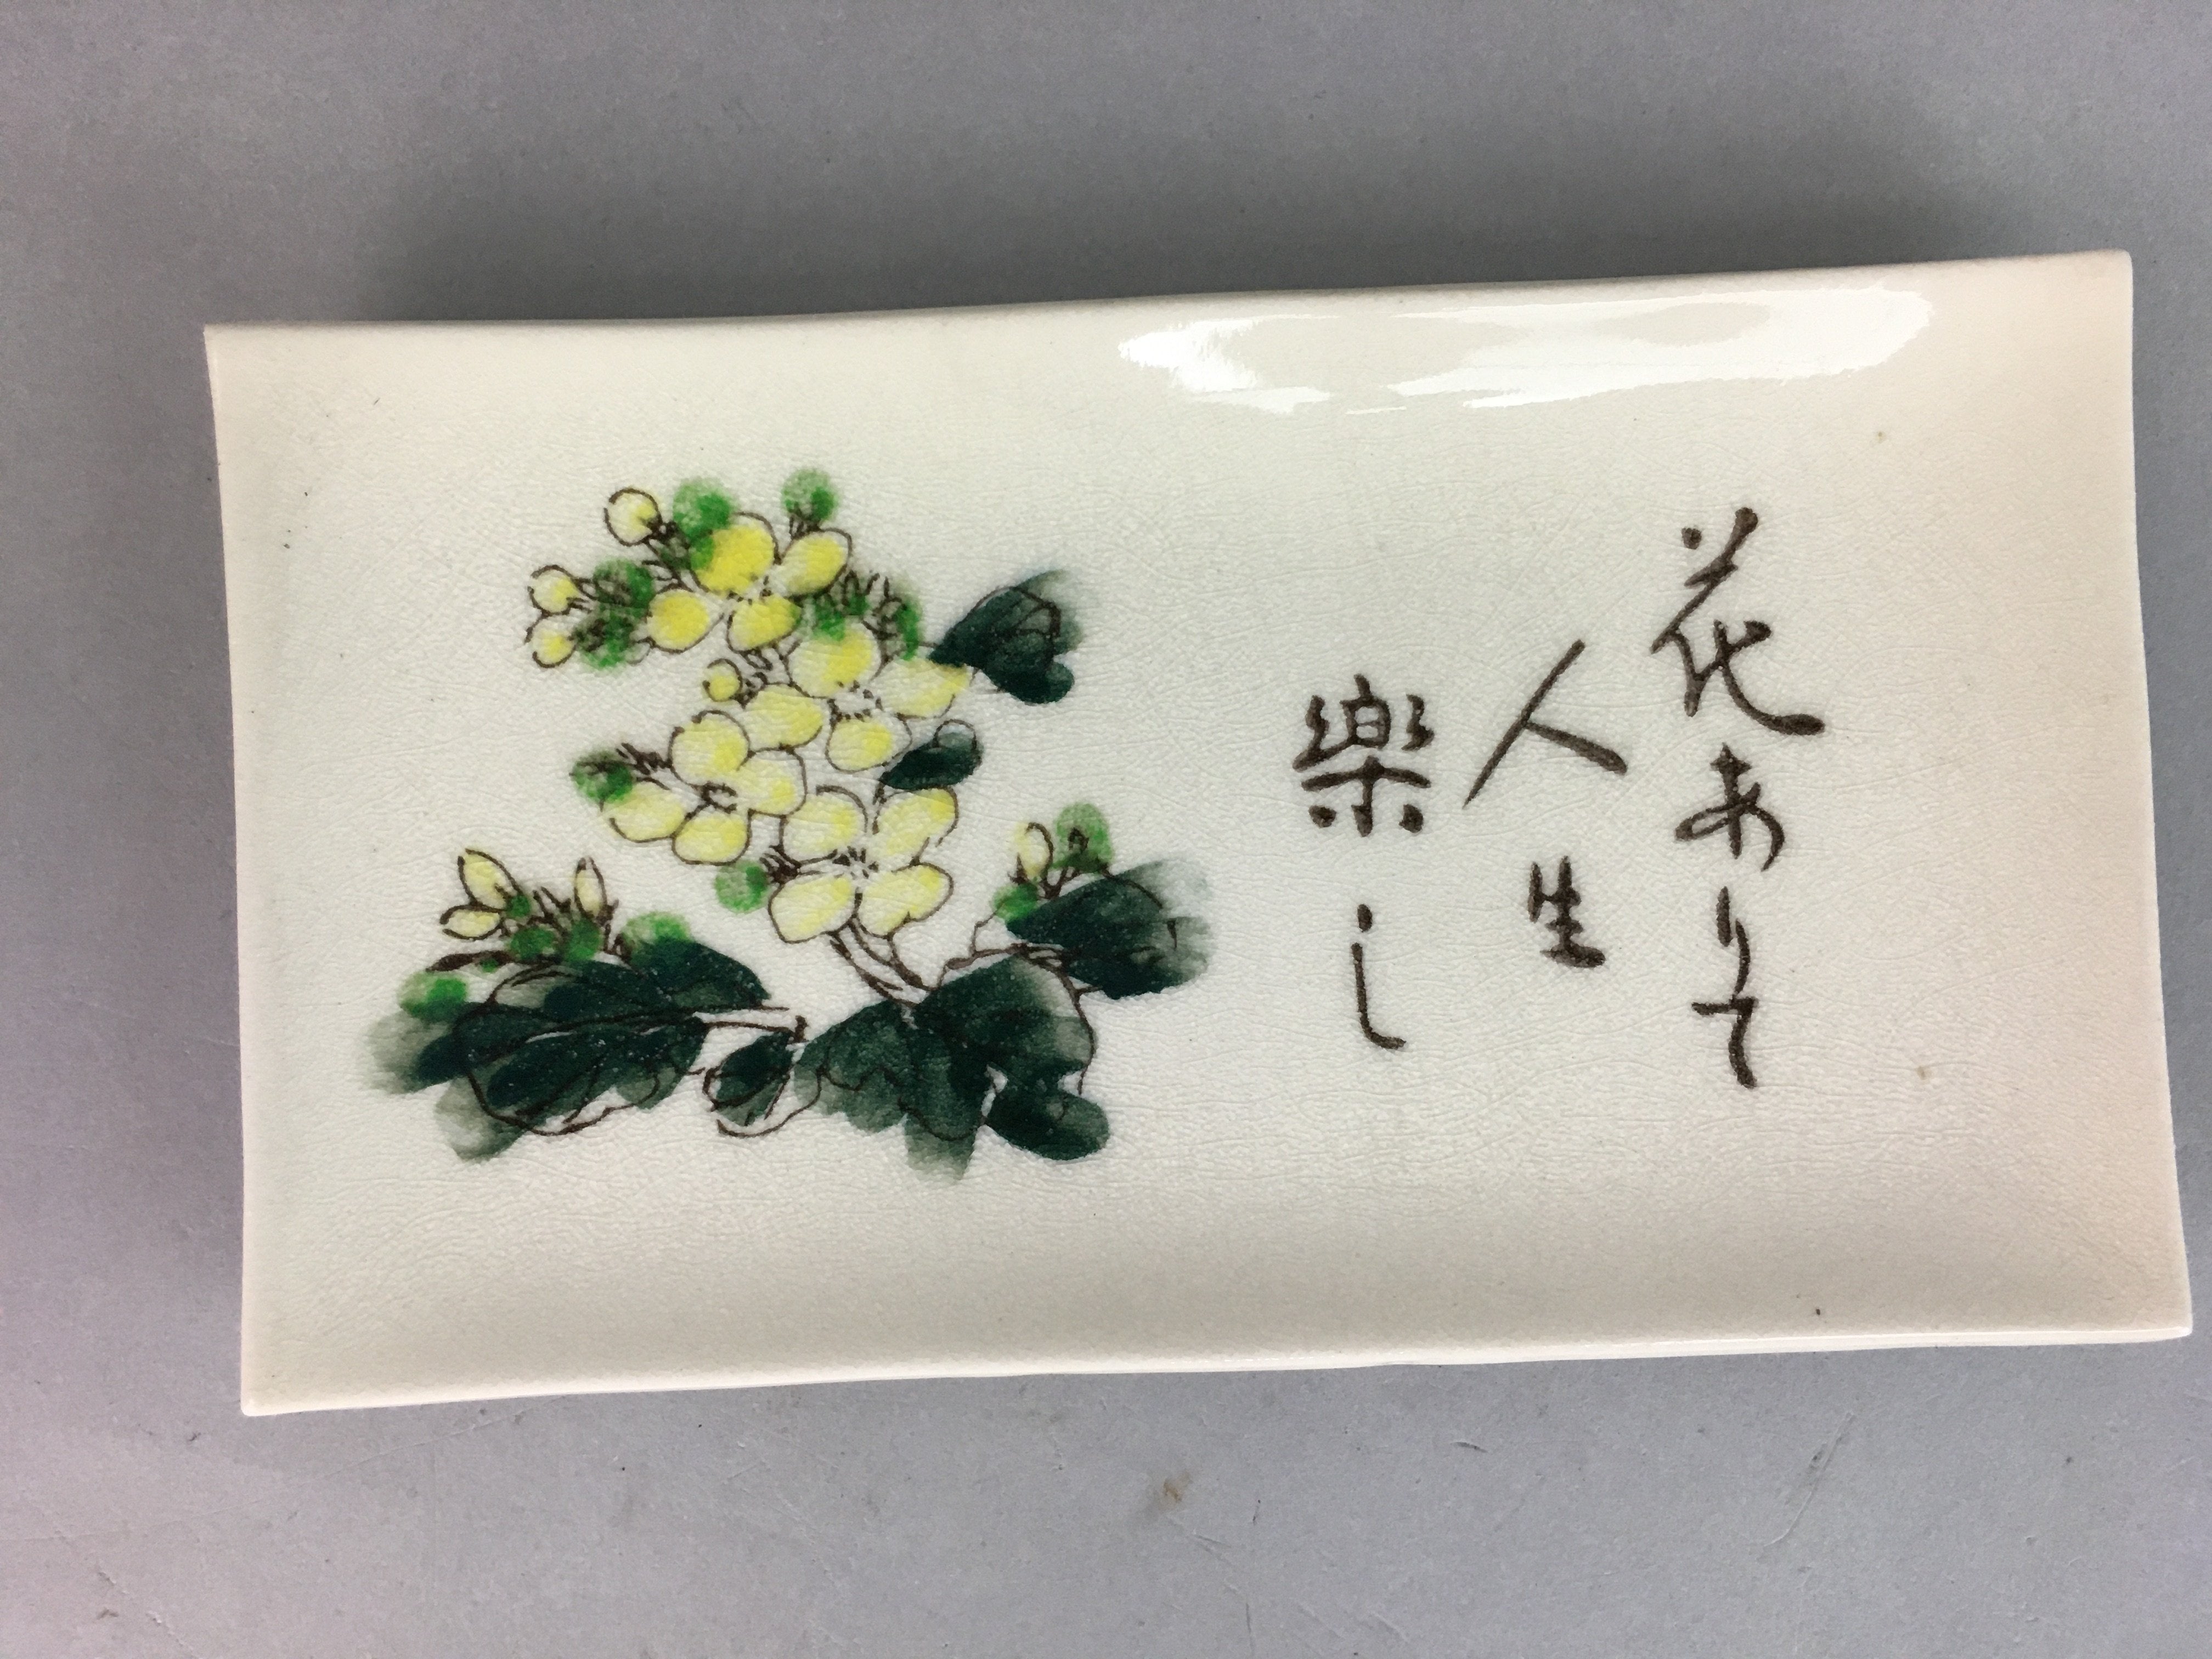 Japanese Ceramic Plate Vtg Rectangle Pottery Floral Kanji Yellow Canola PP326